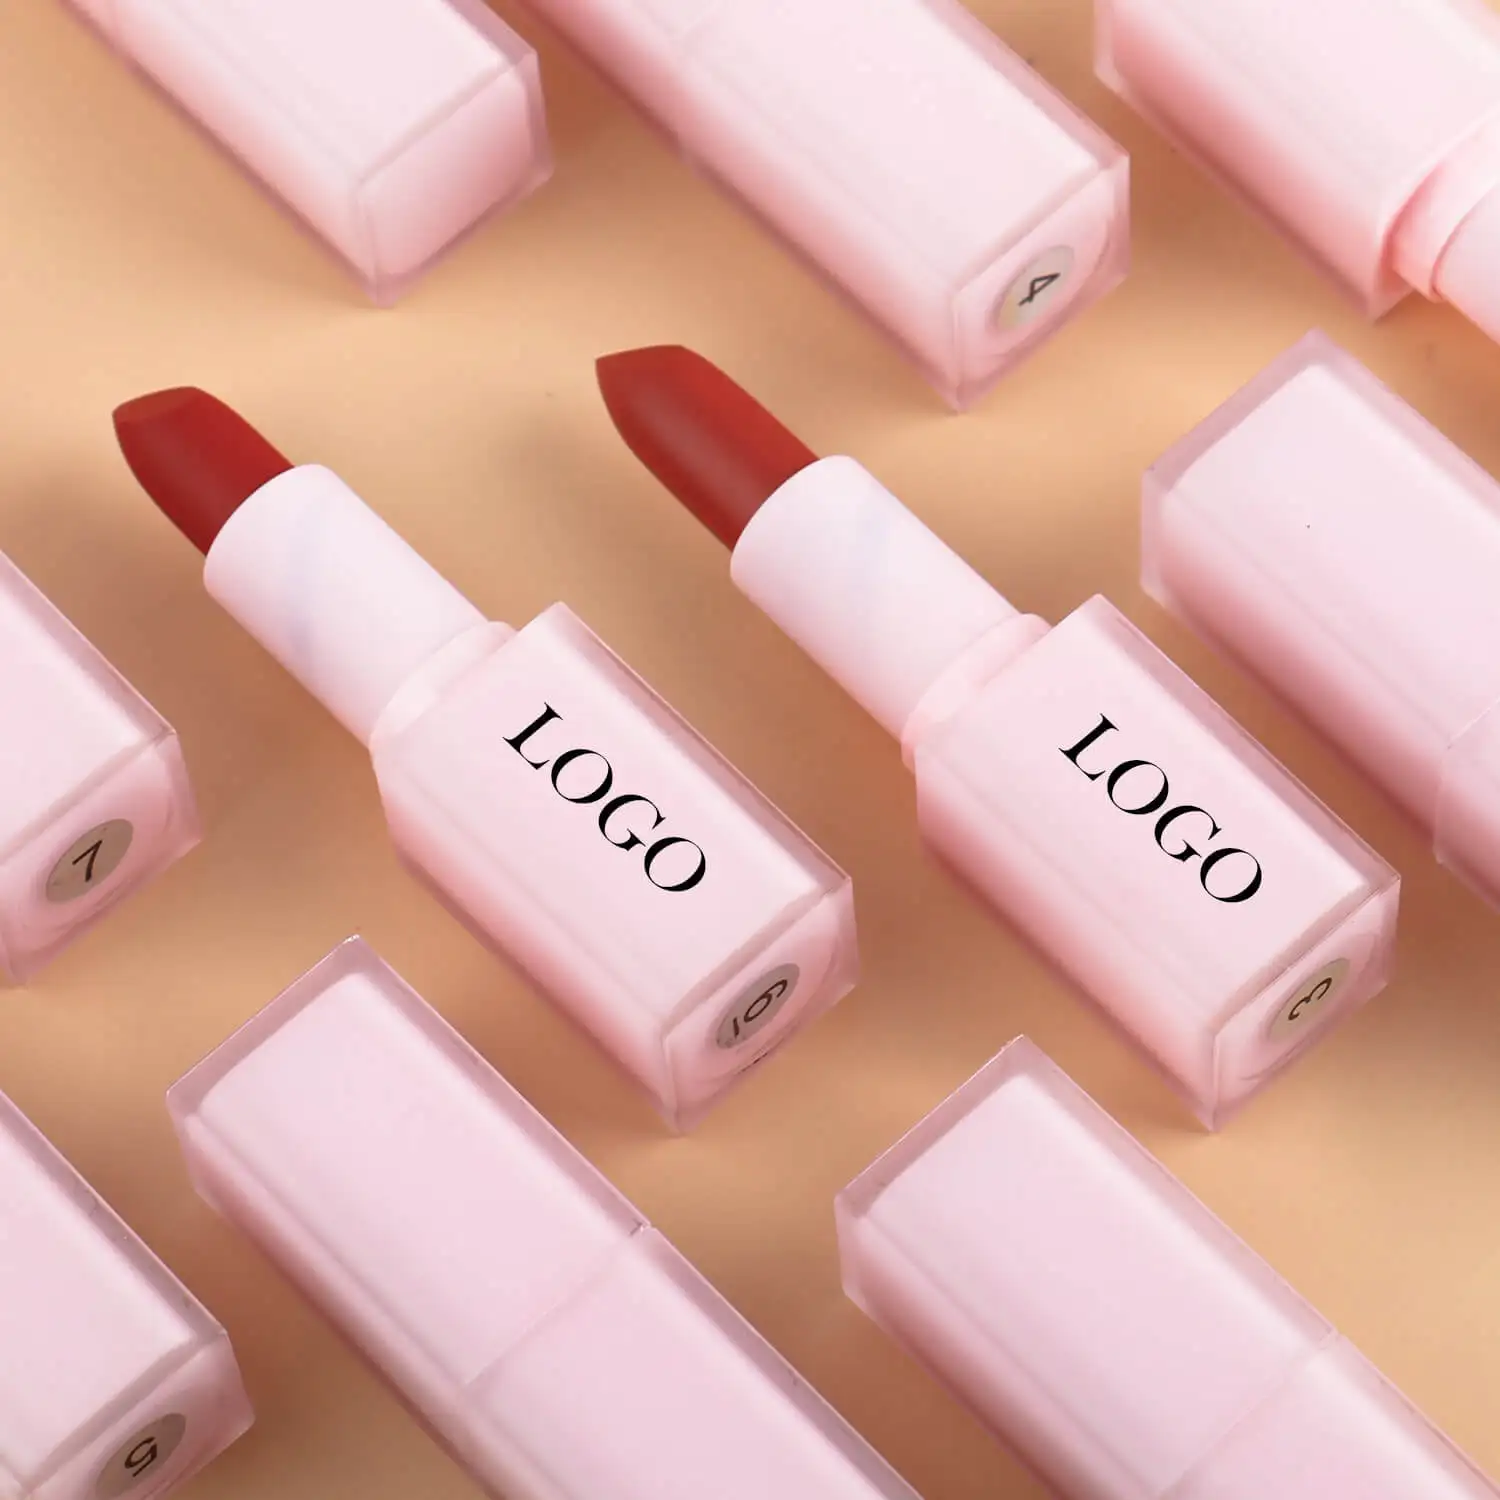 10pcs Lipsticks Private Label Wholesale Lip Makeup Matte Lipstick Waterproof Print Your Own Brand Cosmetics Pink Packaging Vegan